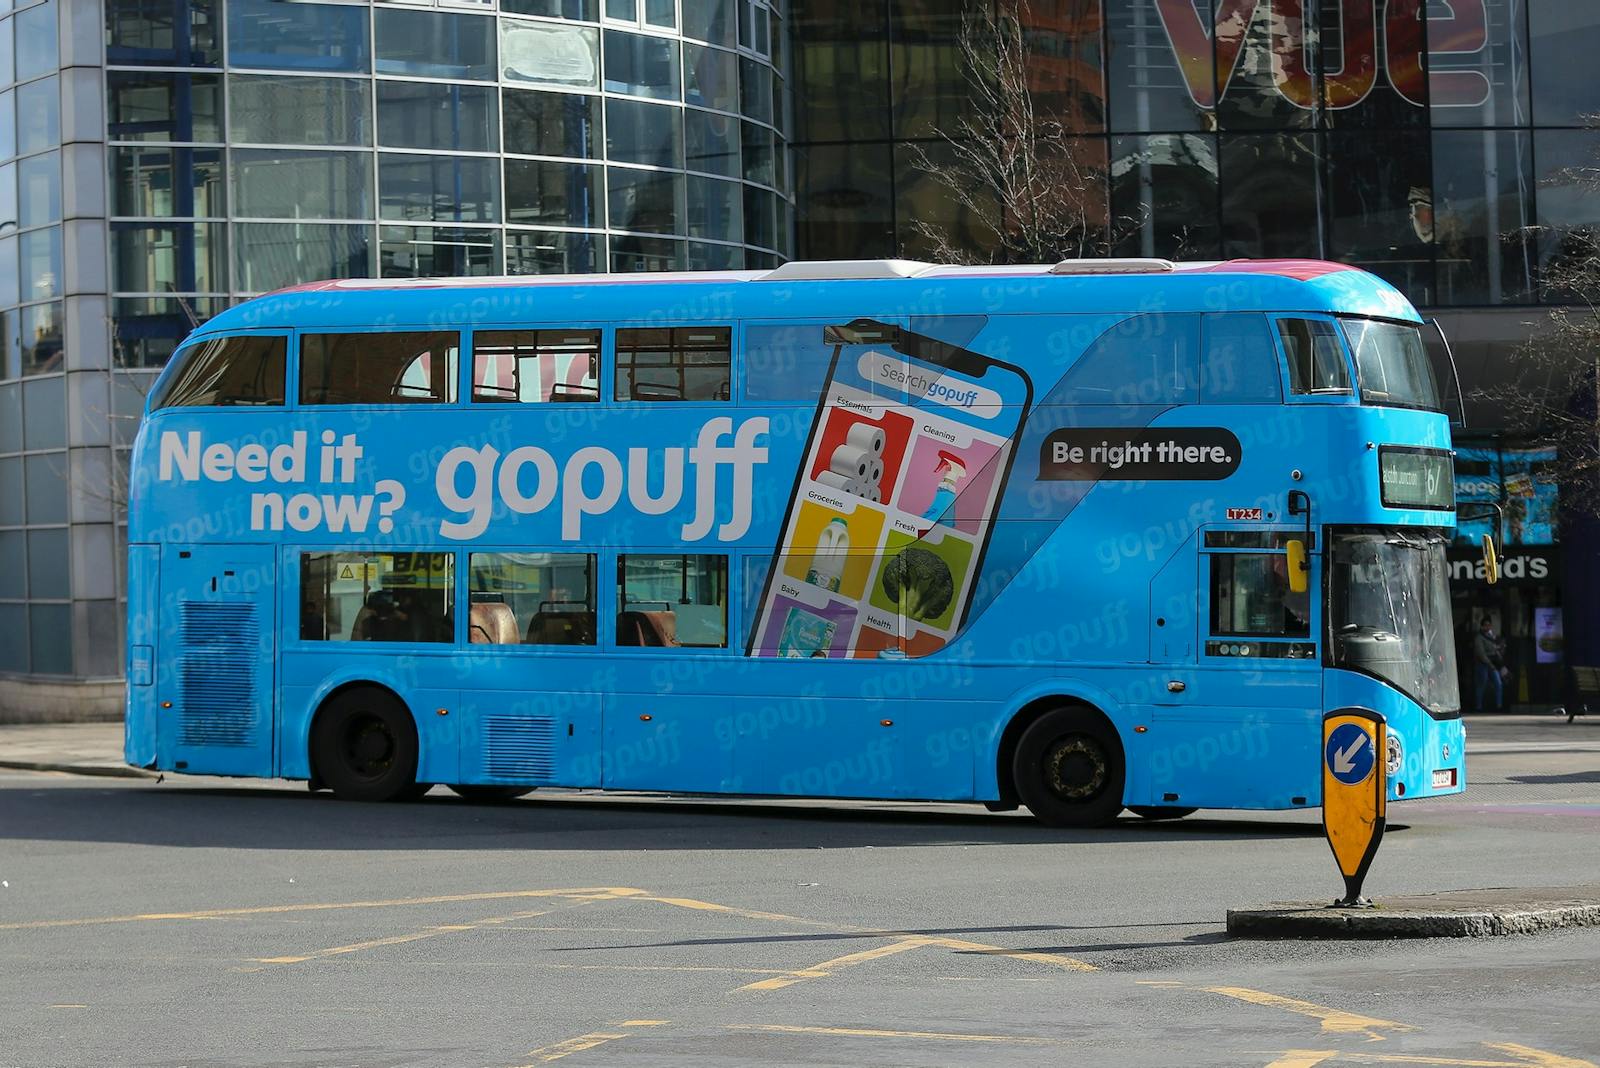 A London bus advertising Gopuff services. Photo: AP